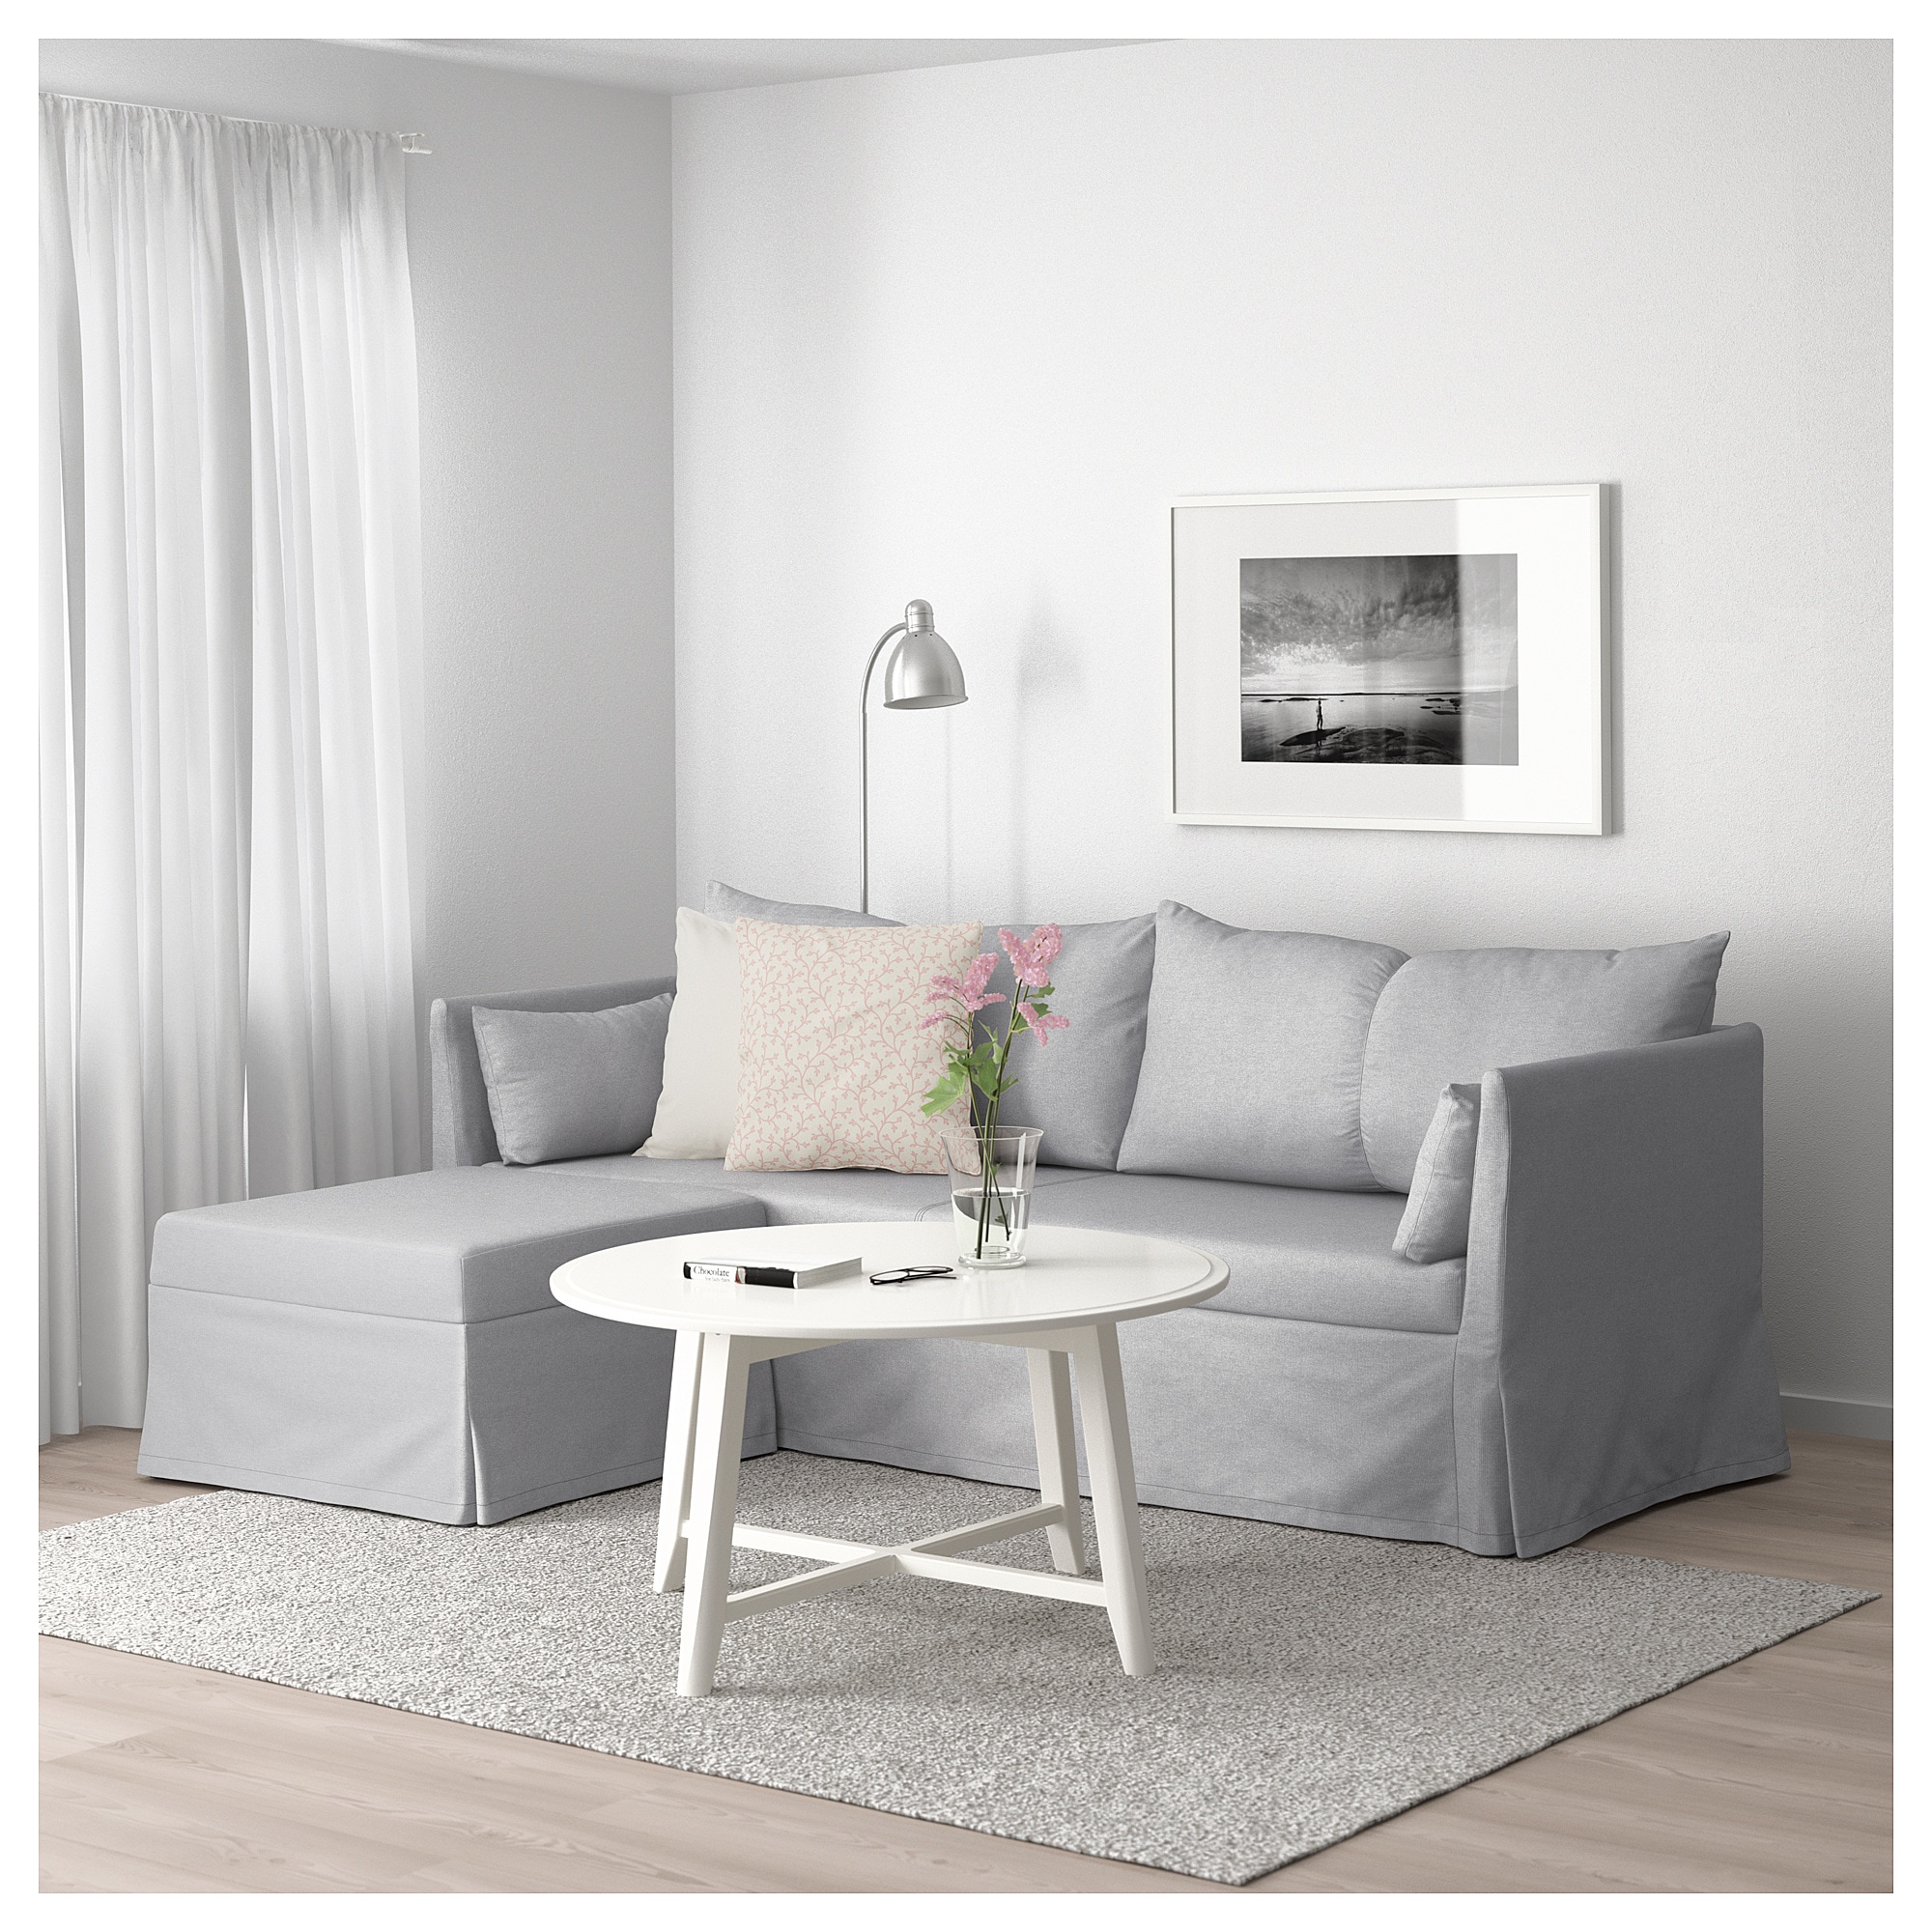 liquid harassment Intervene IKEA Bråthult and Sandbacken sofa review: Same frame, different name? |  Comfort Works Blog & Sofa Resources